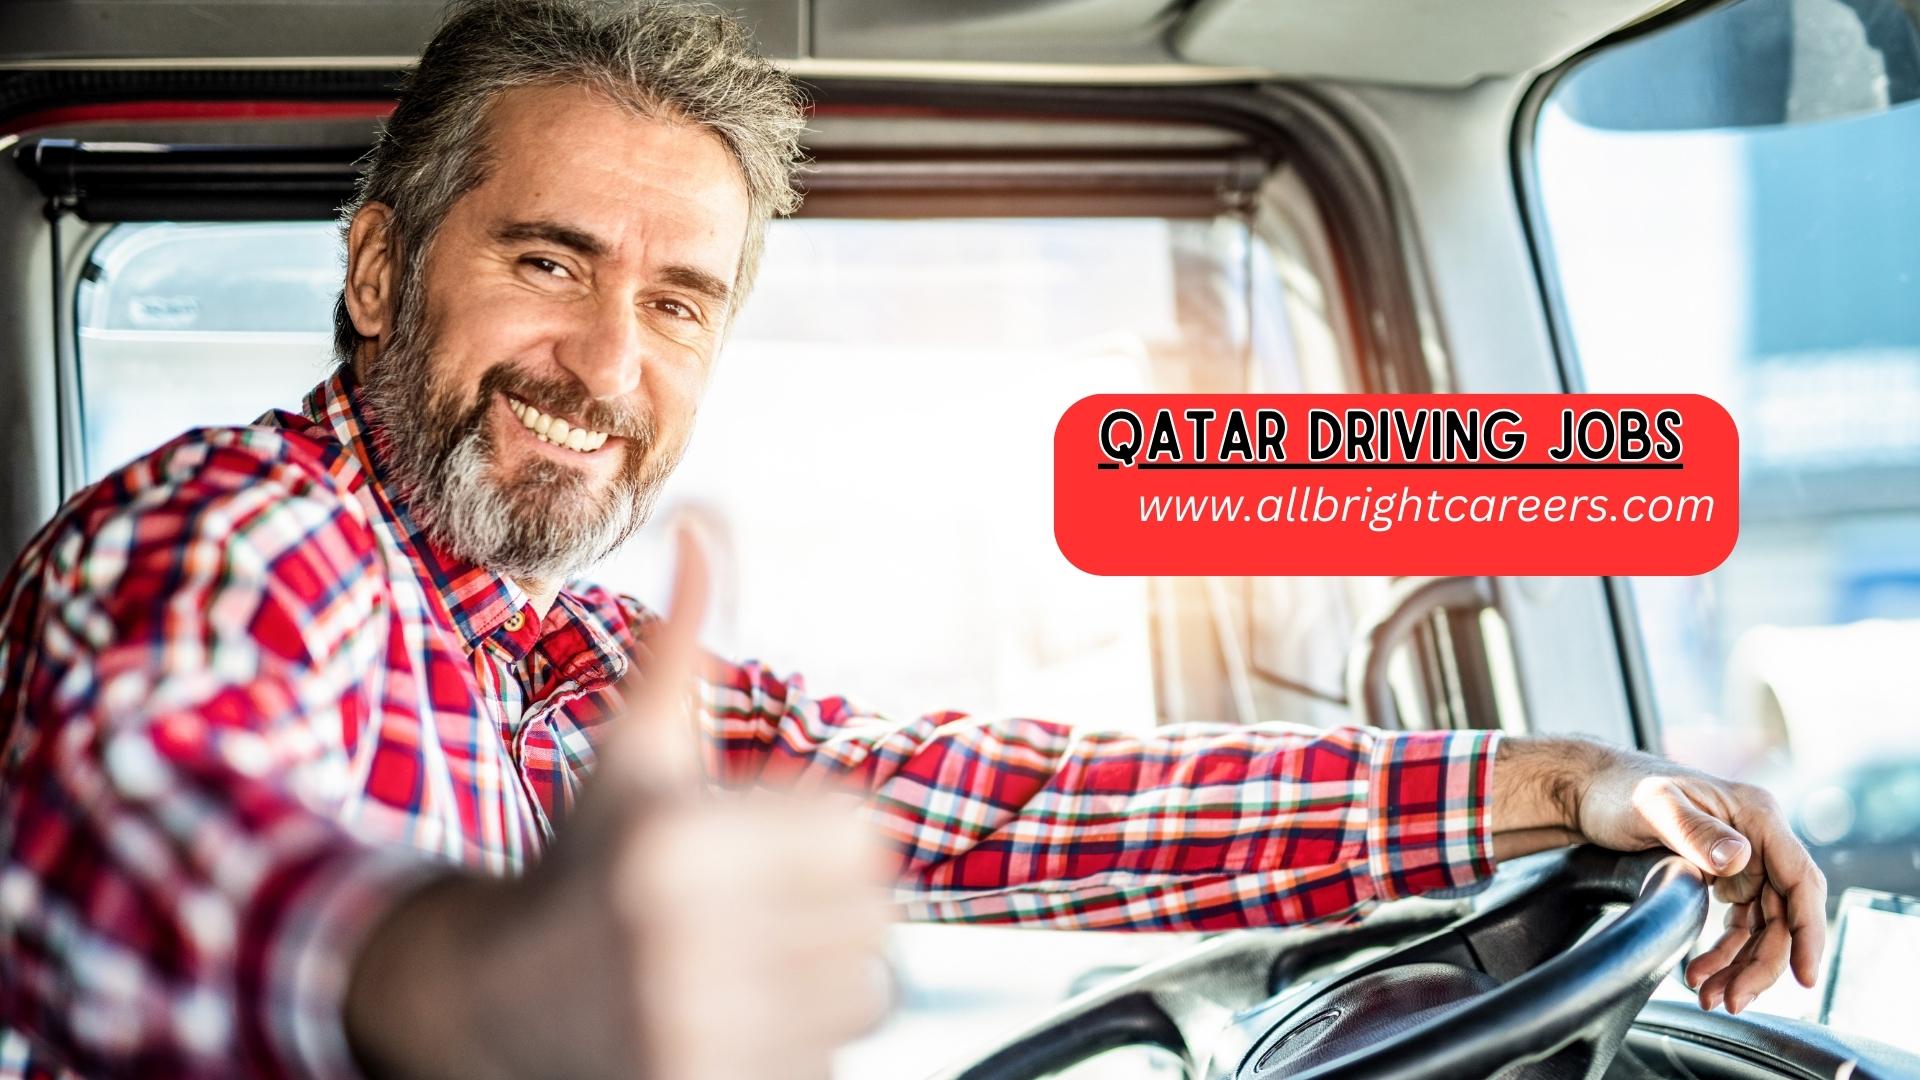 Qatar Driving jobs